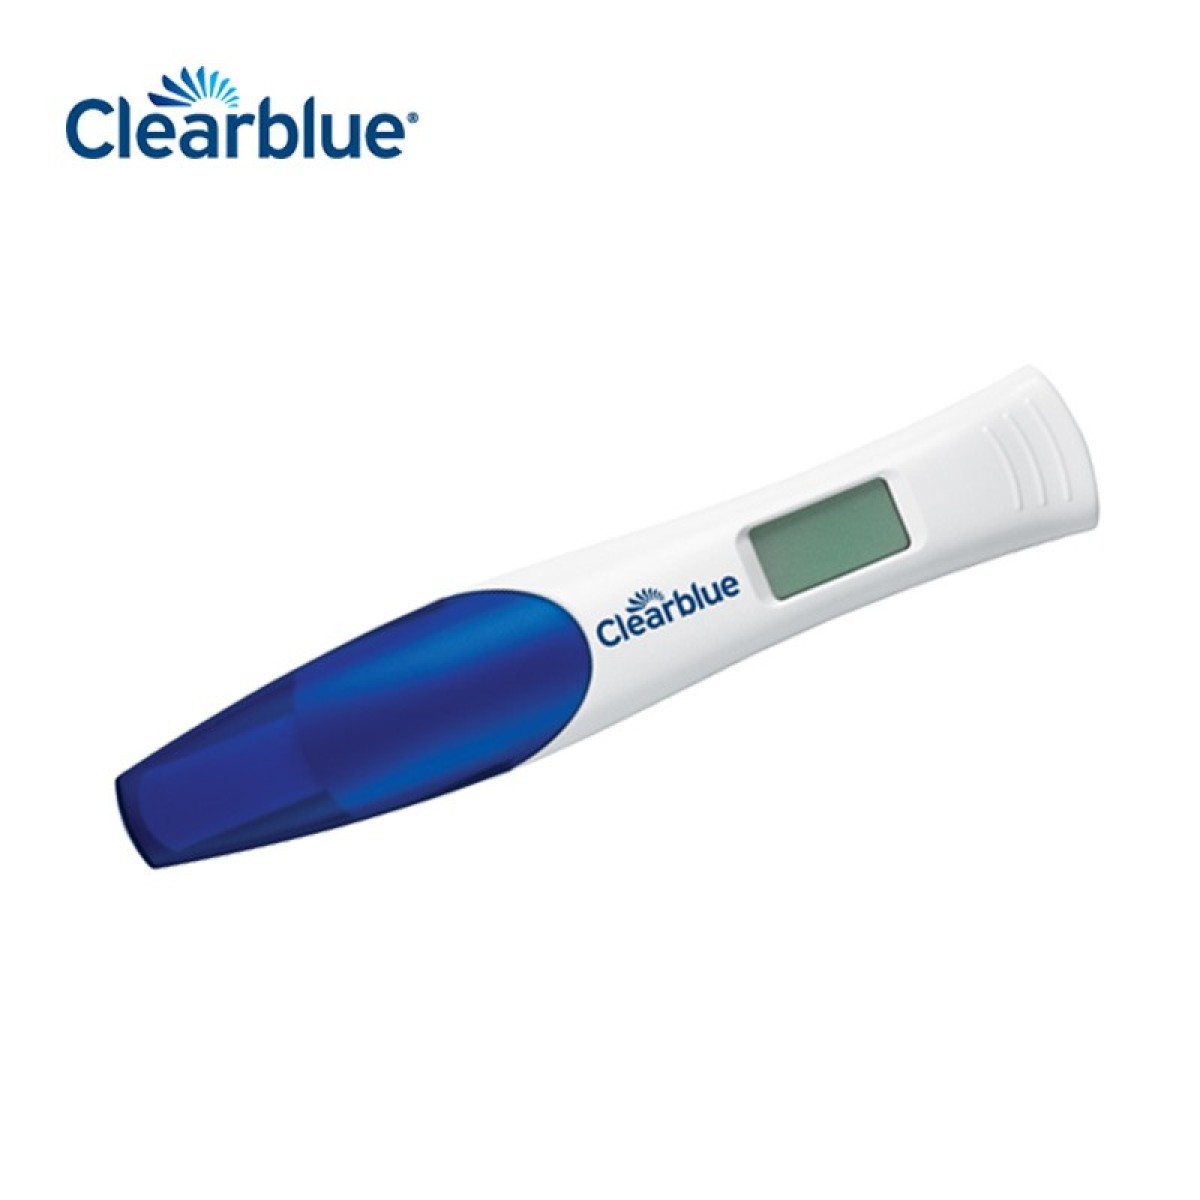 ClearBlue Digital 電子即知驗孕棒